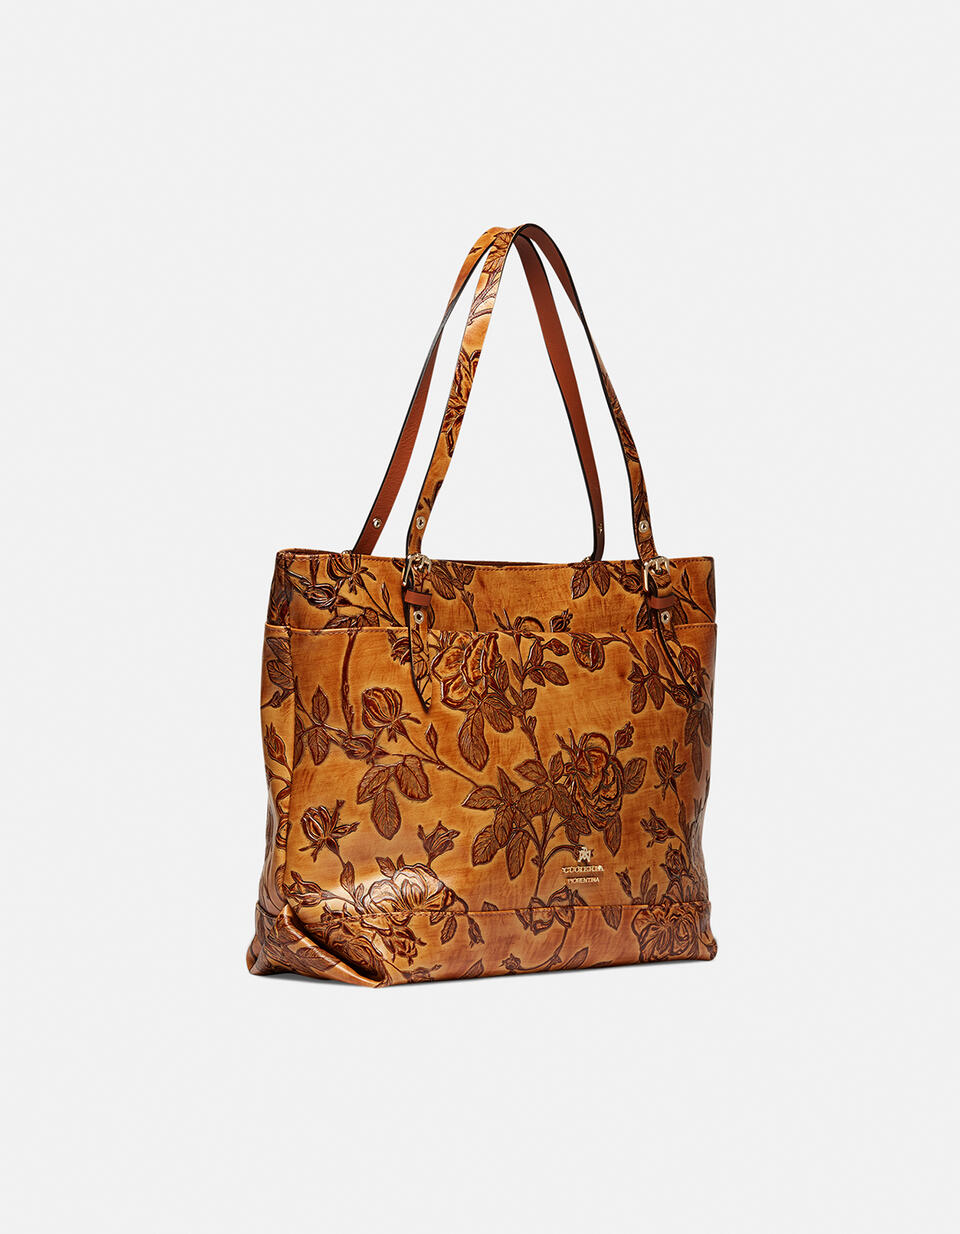 Big Mimì shopping bag keystone design - SHOPPING - WOMEN'S BAGS | bags  - SHOPPING - WOMEN'S BAGS | bagsCuoieria Fiorentina